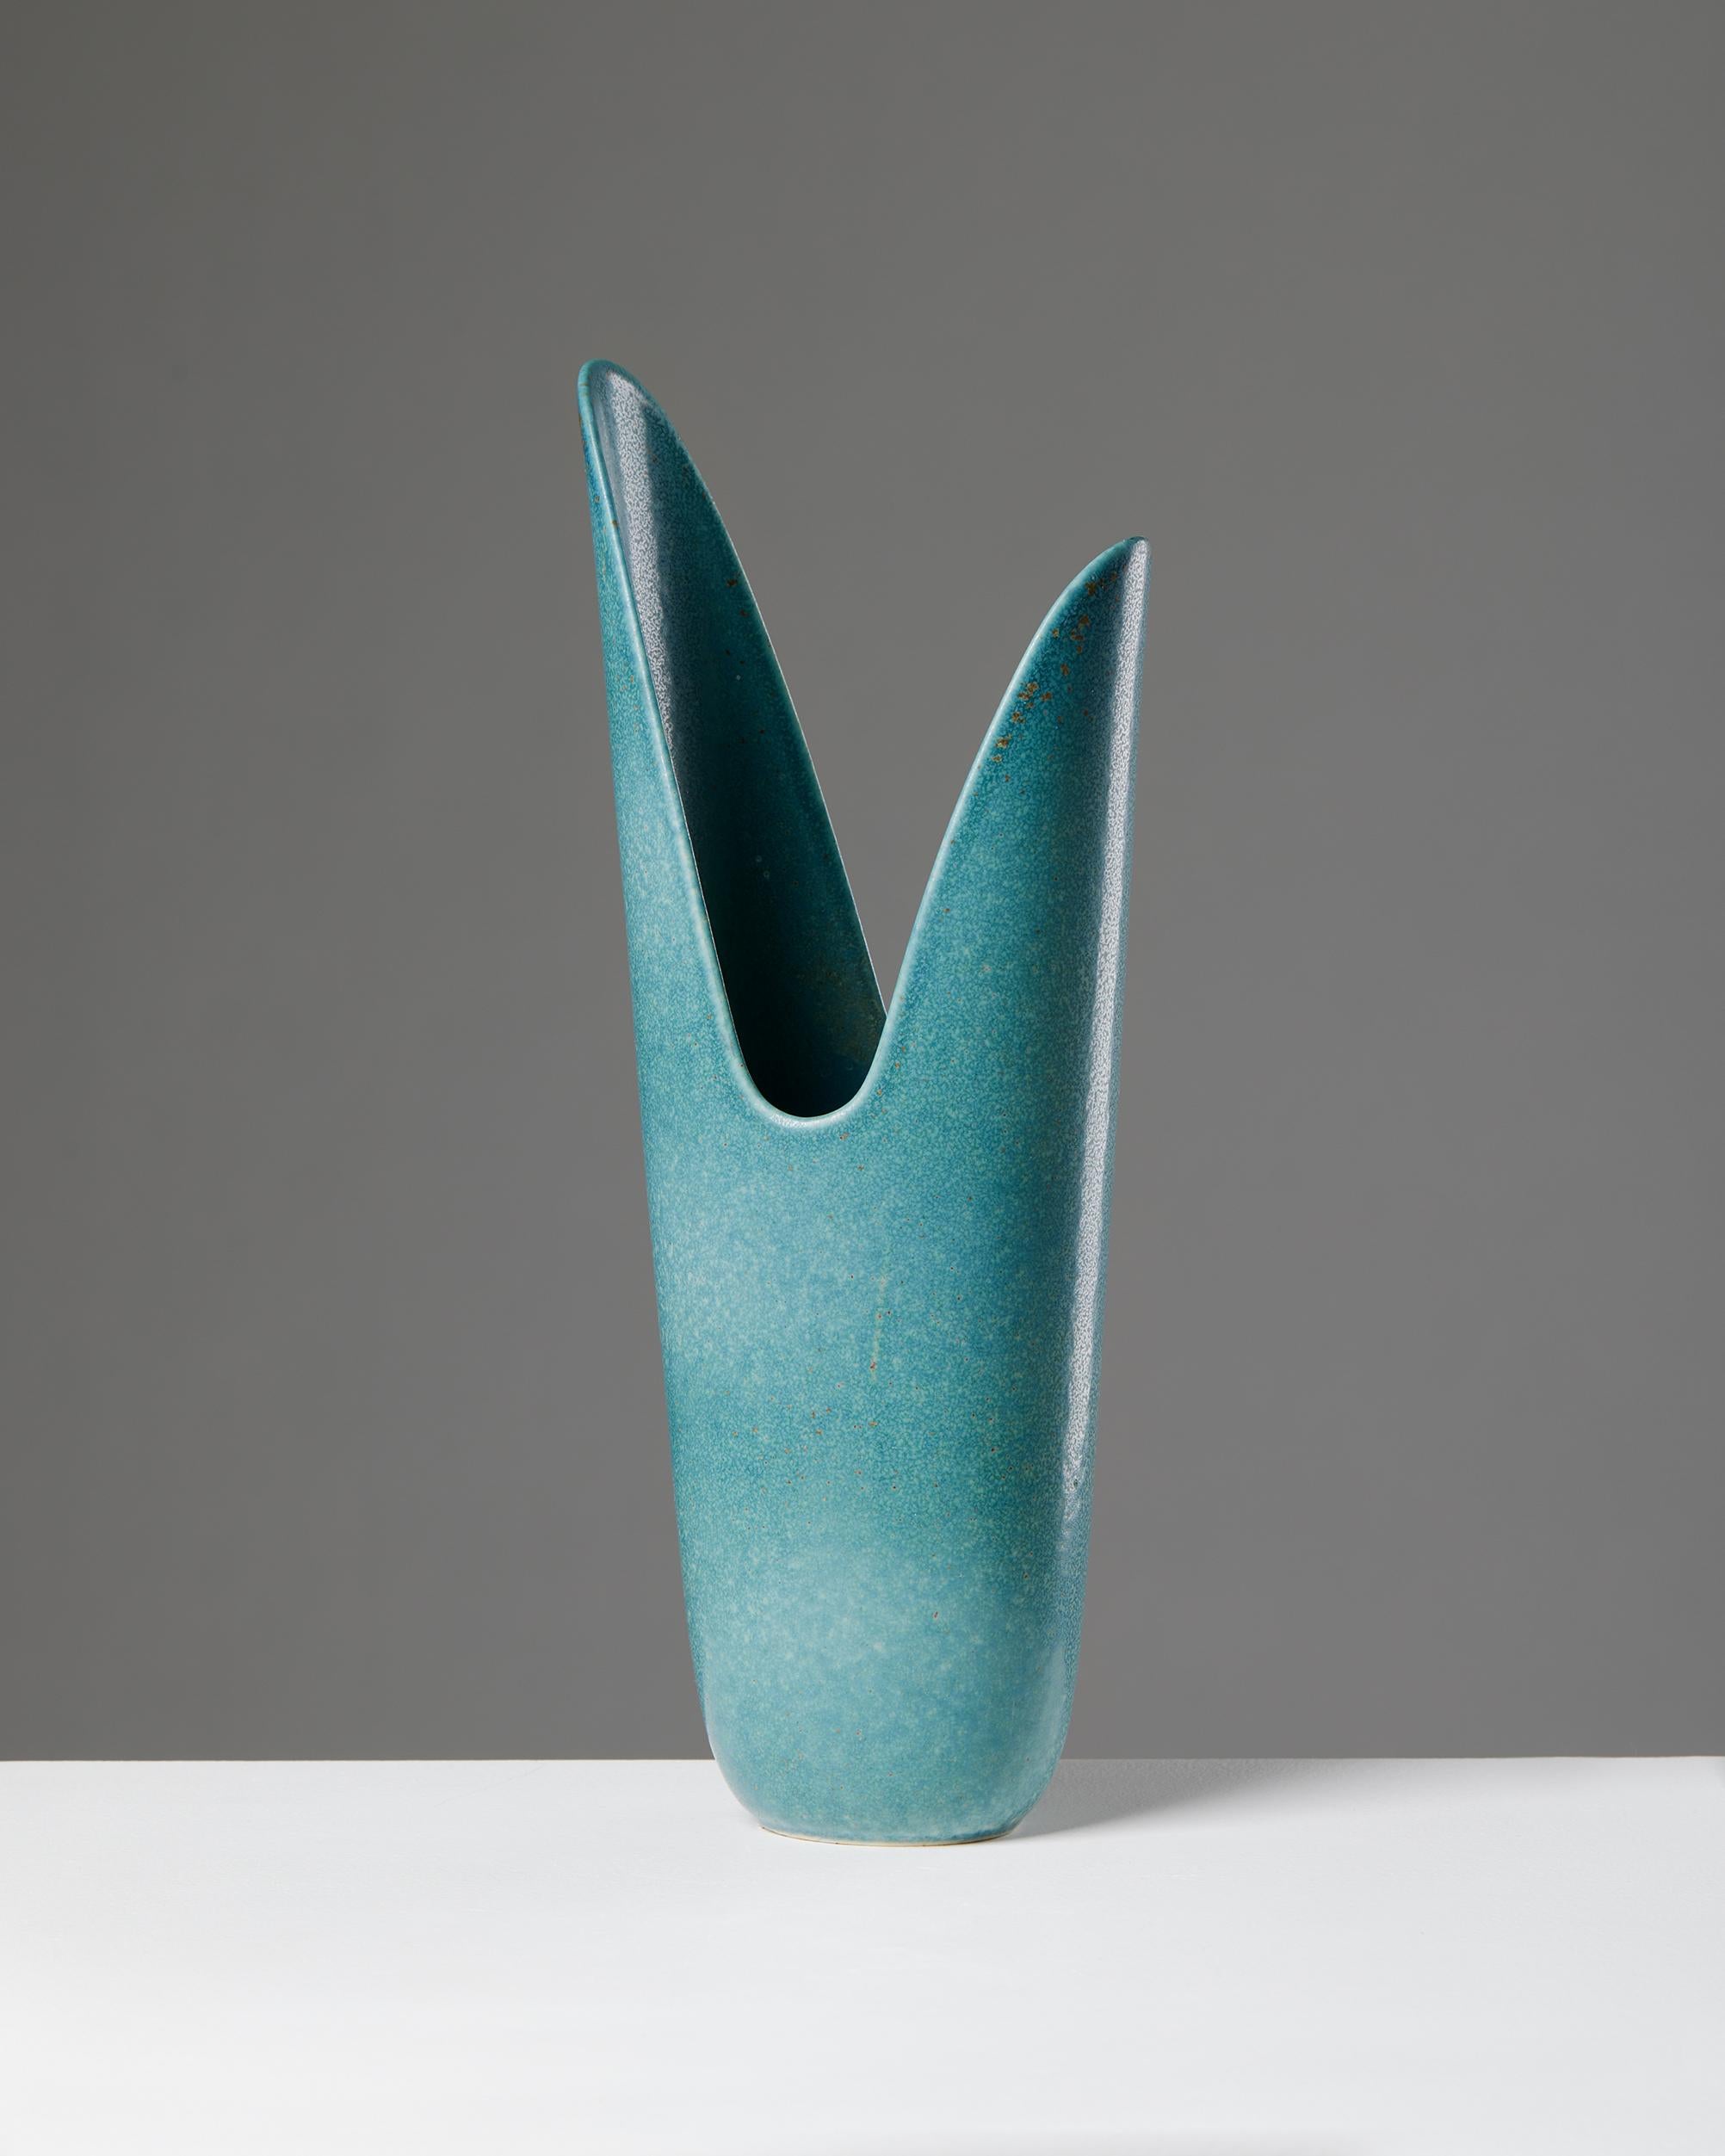 Vase by Gunnar Nylund for Rörstrand,
Sweden, 1950s.

Stoneware.

Signed.

H: 31 cm
W: 12 cm
D: 8.5 cm